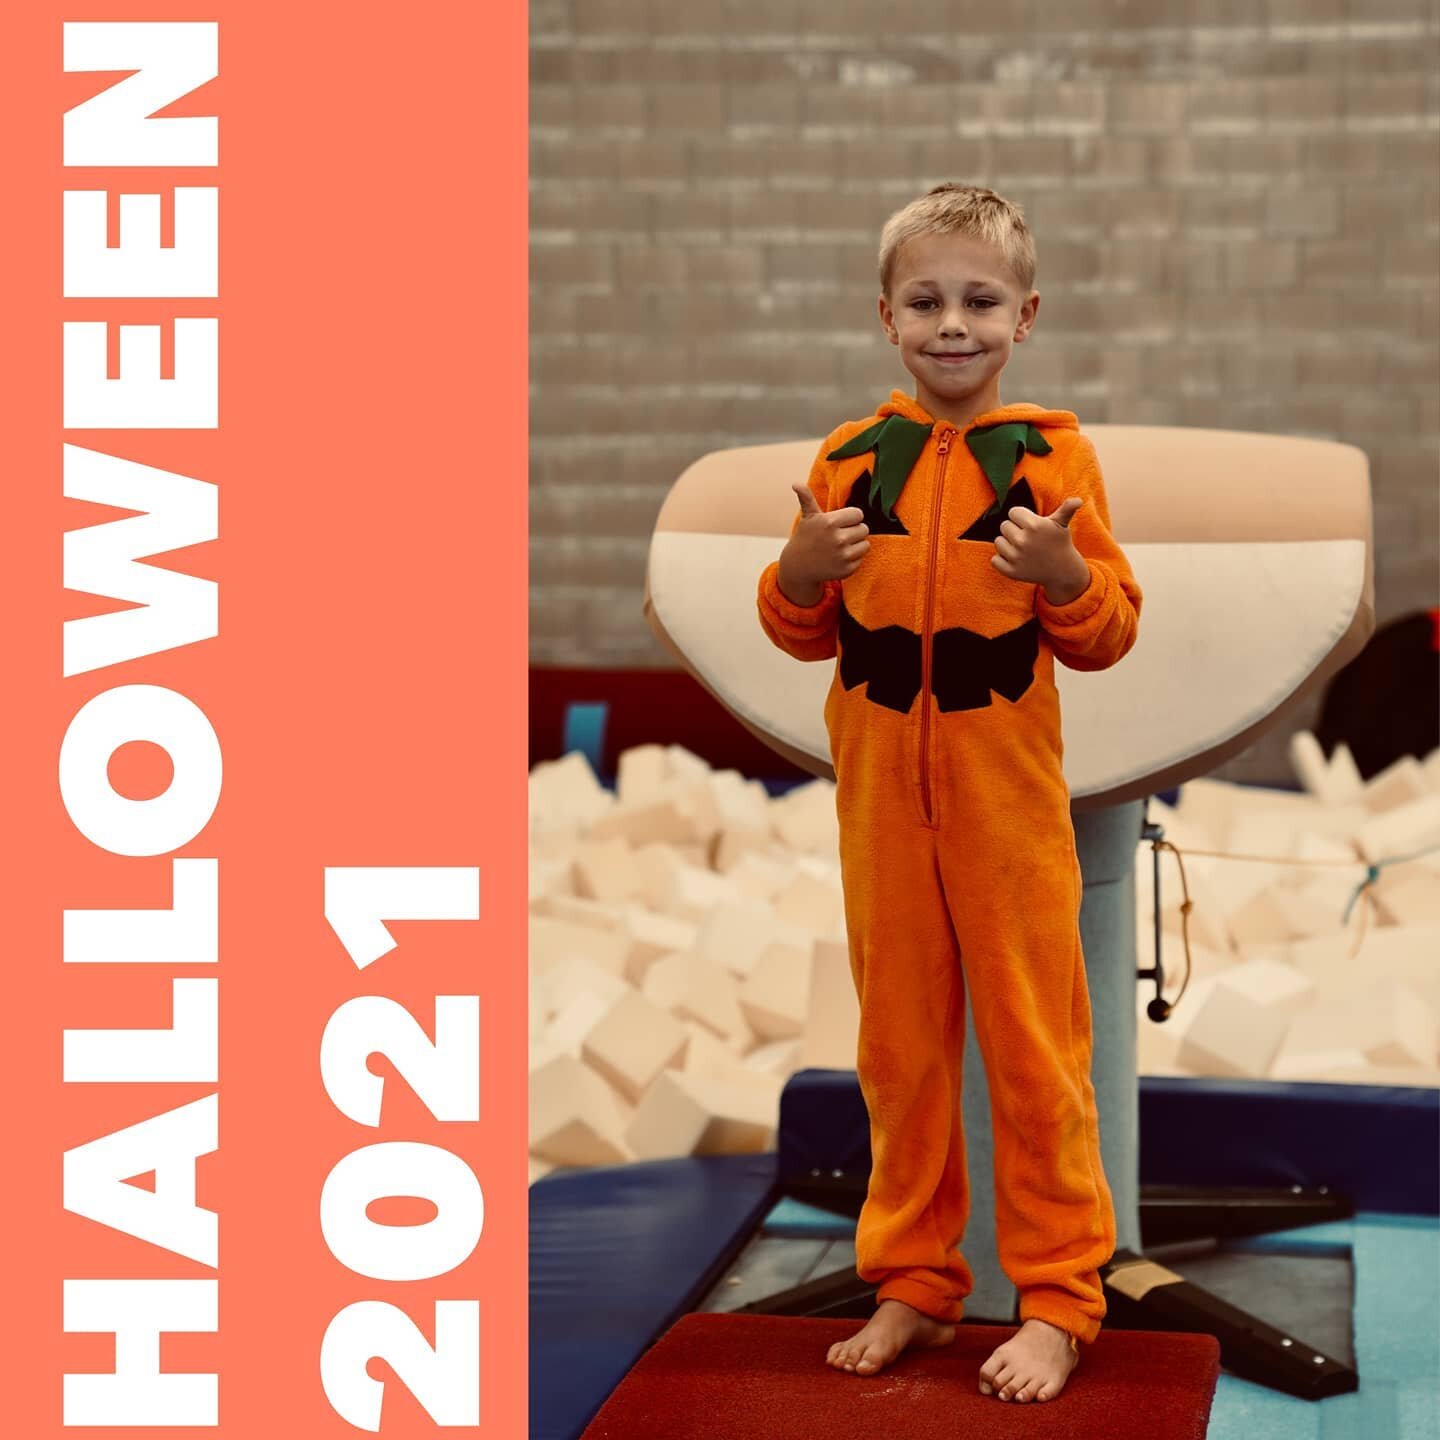 Happy Halloween 🎃🦇👻
Turnkring Geraardsbergen
#gymnastiek #gyminstyle #halloweentijdensdelessen 🤡